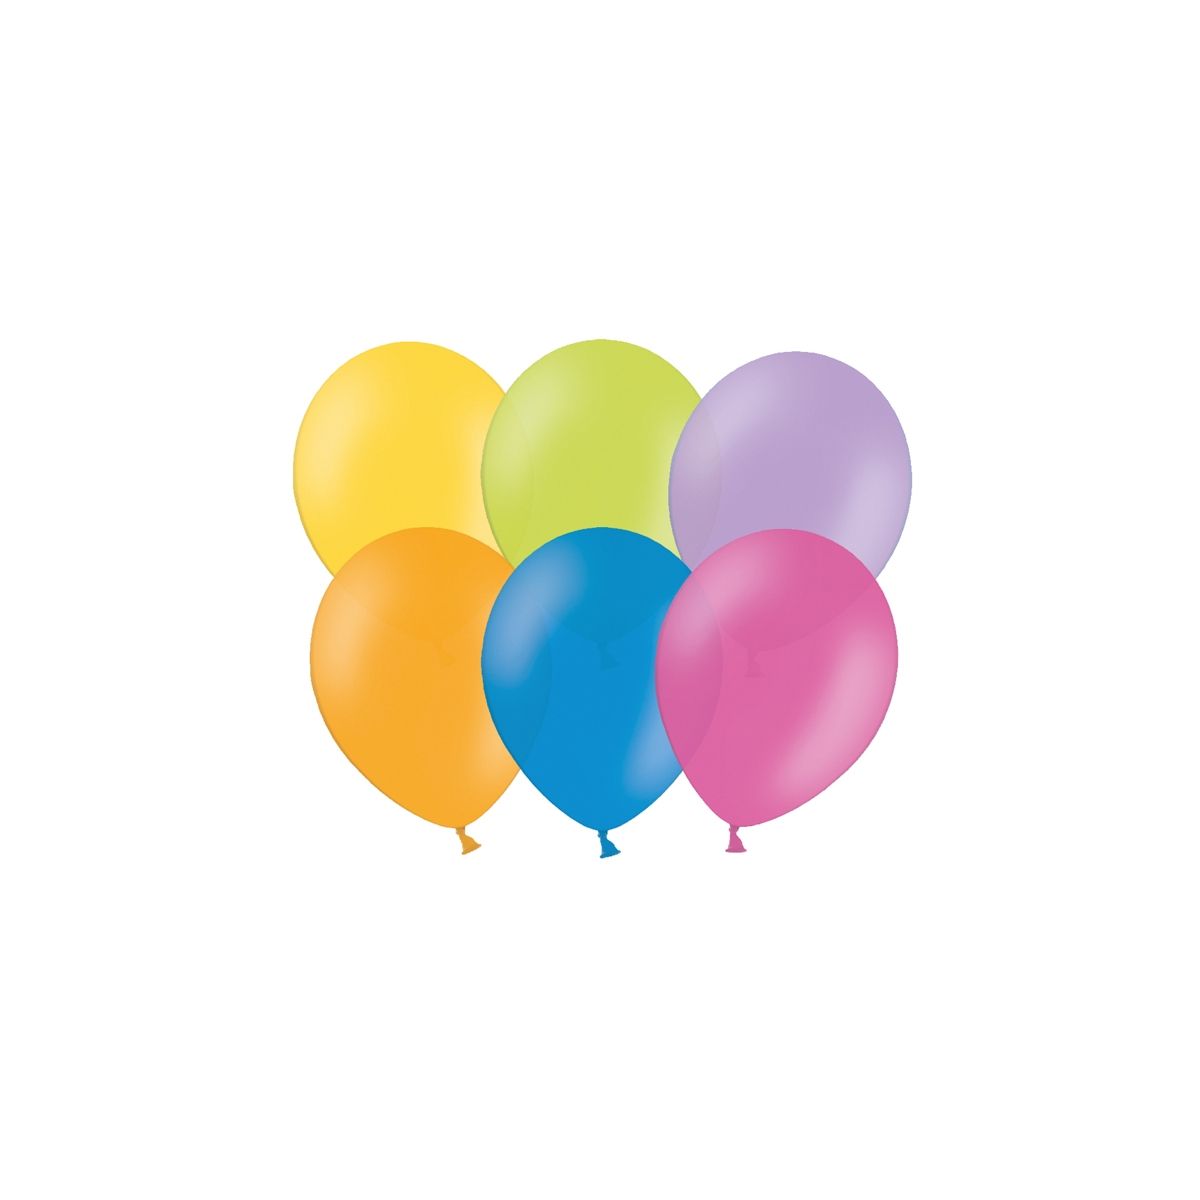 Balon gumowy Partydeco pastelowy 100 szt mix 10cal (10P-000)